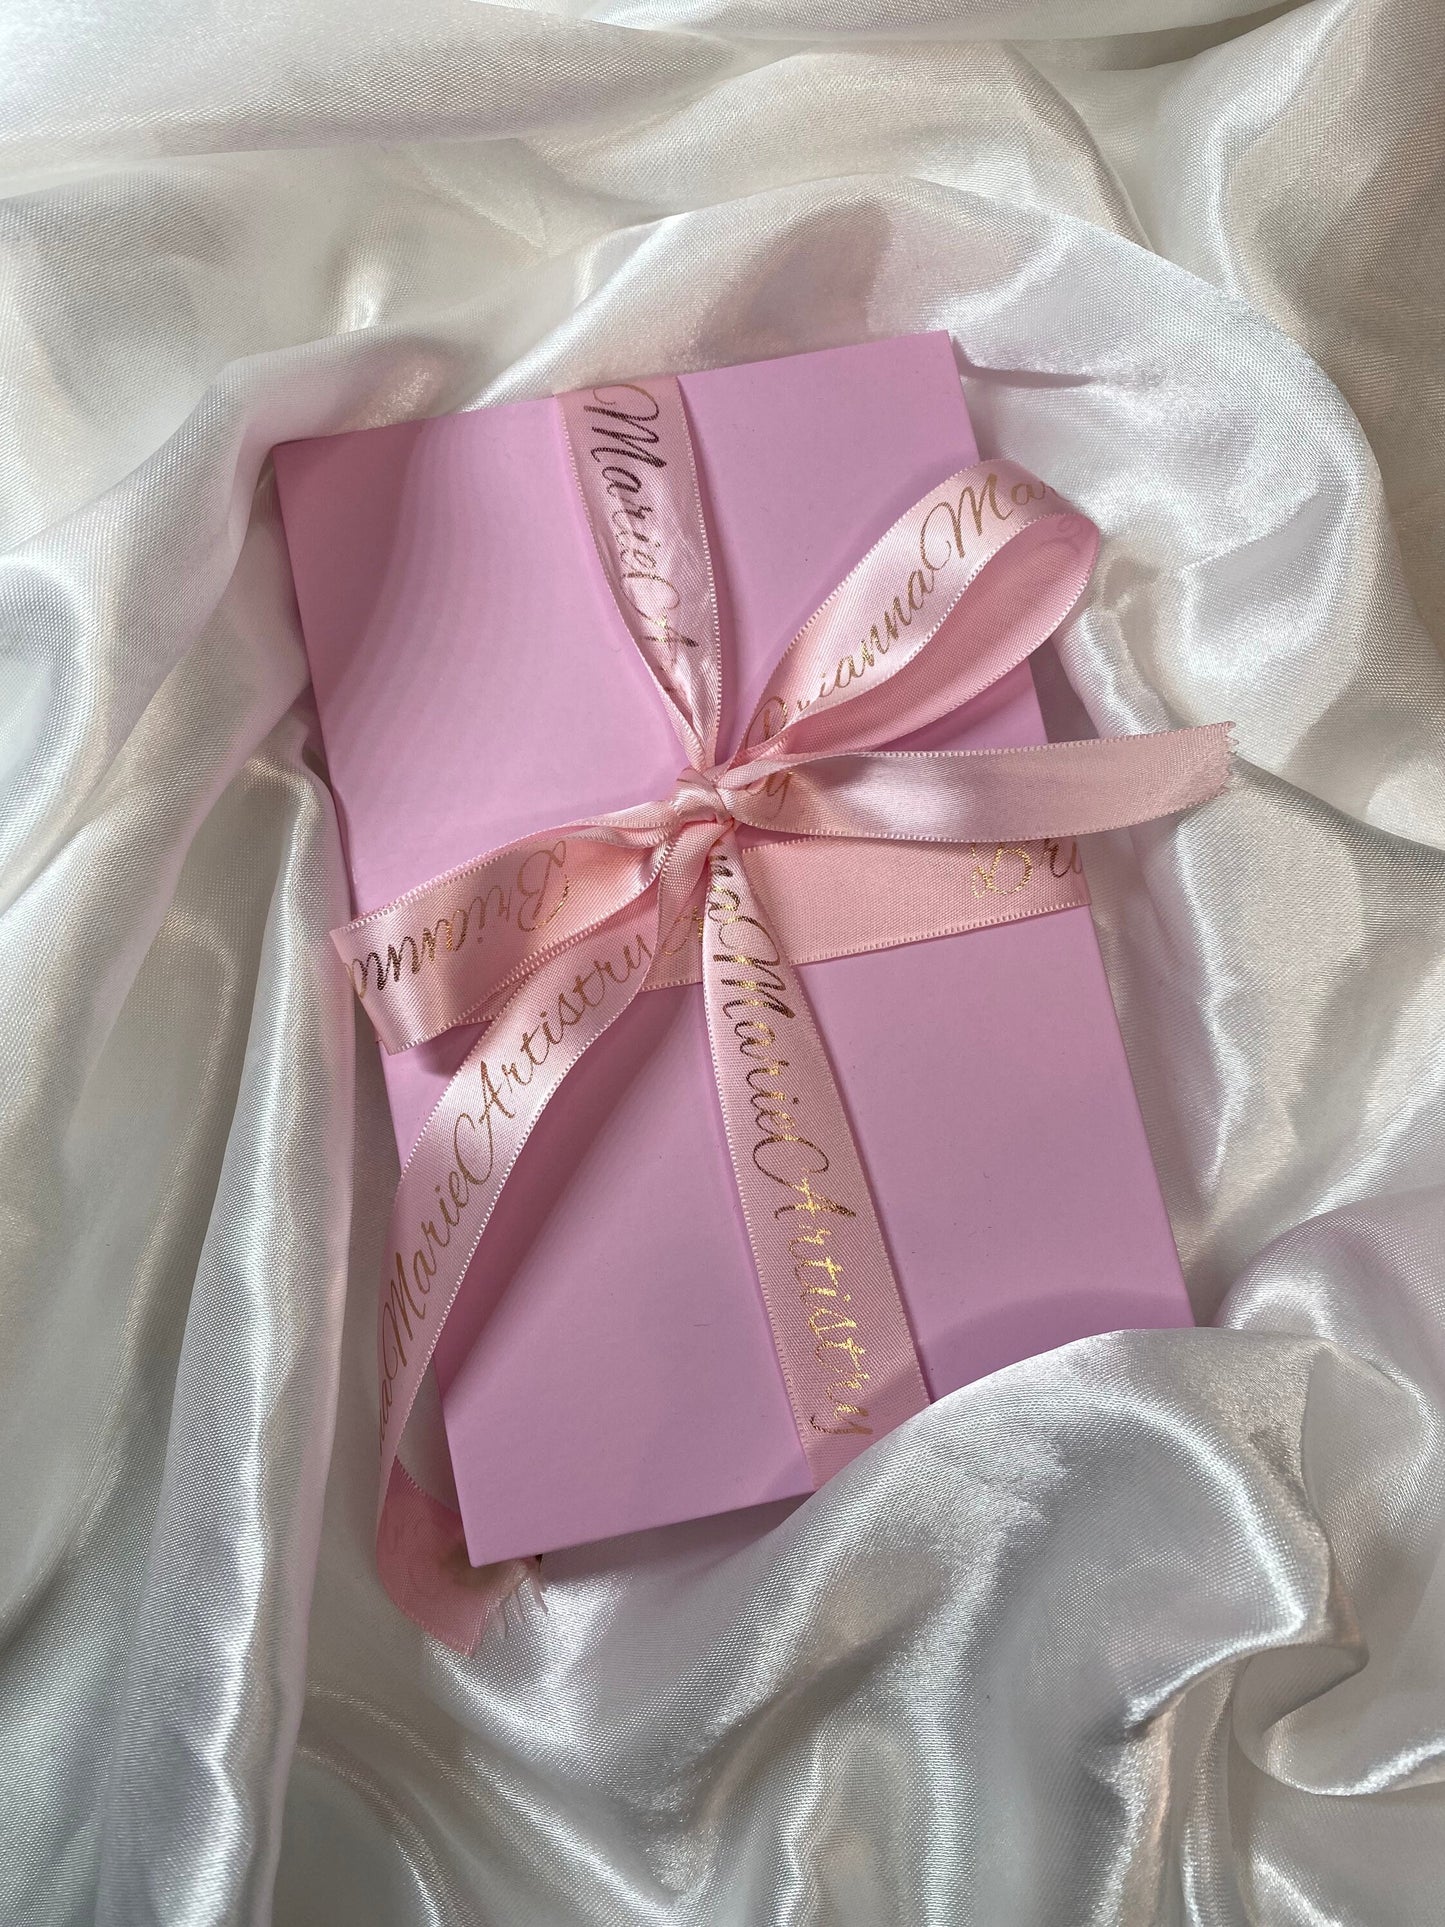 Surprise Gift Box - Press On Nail Sets